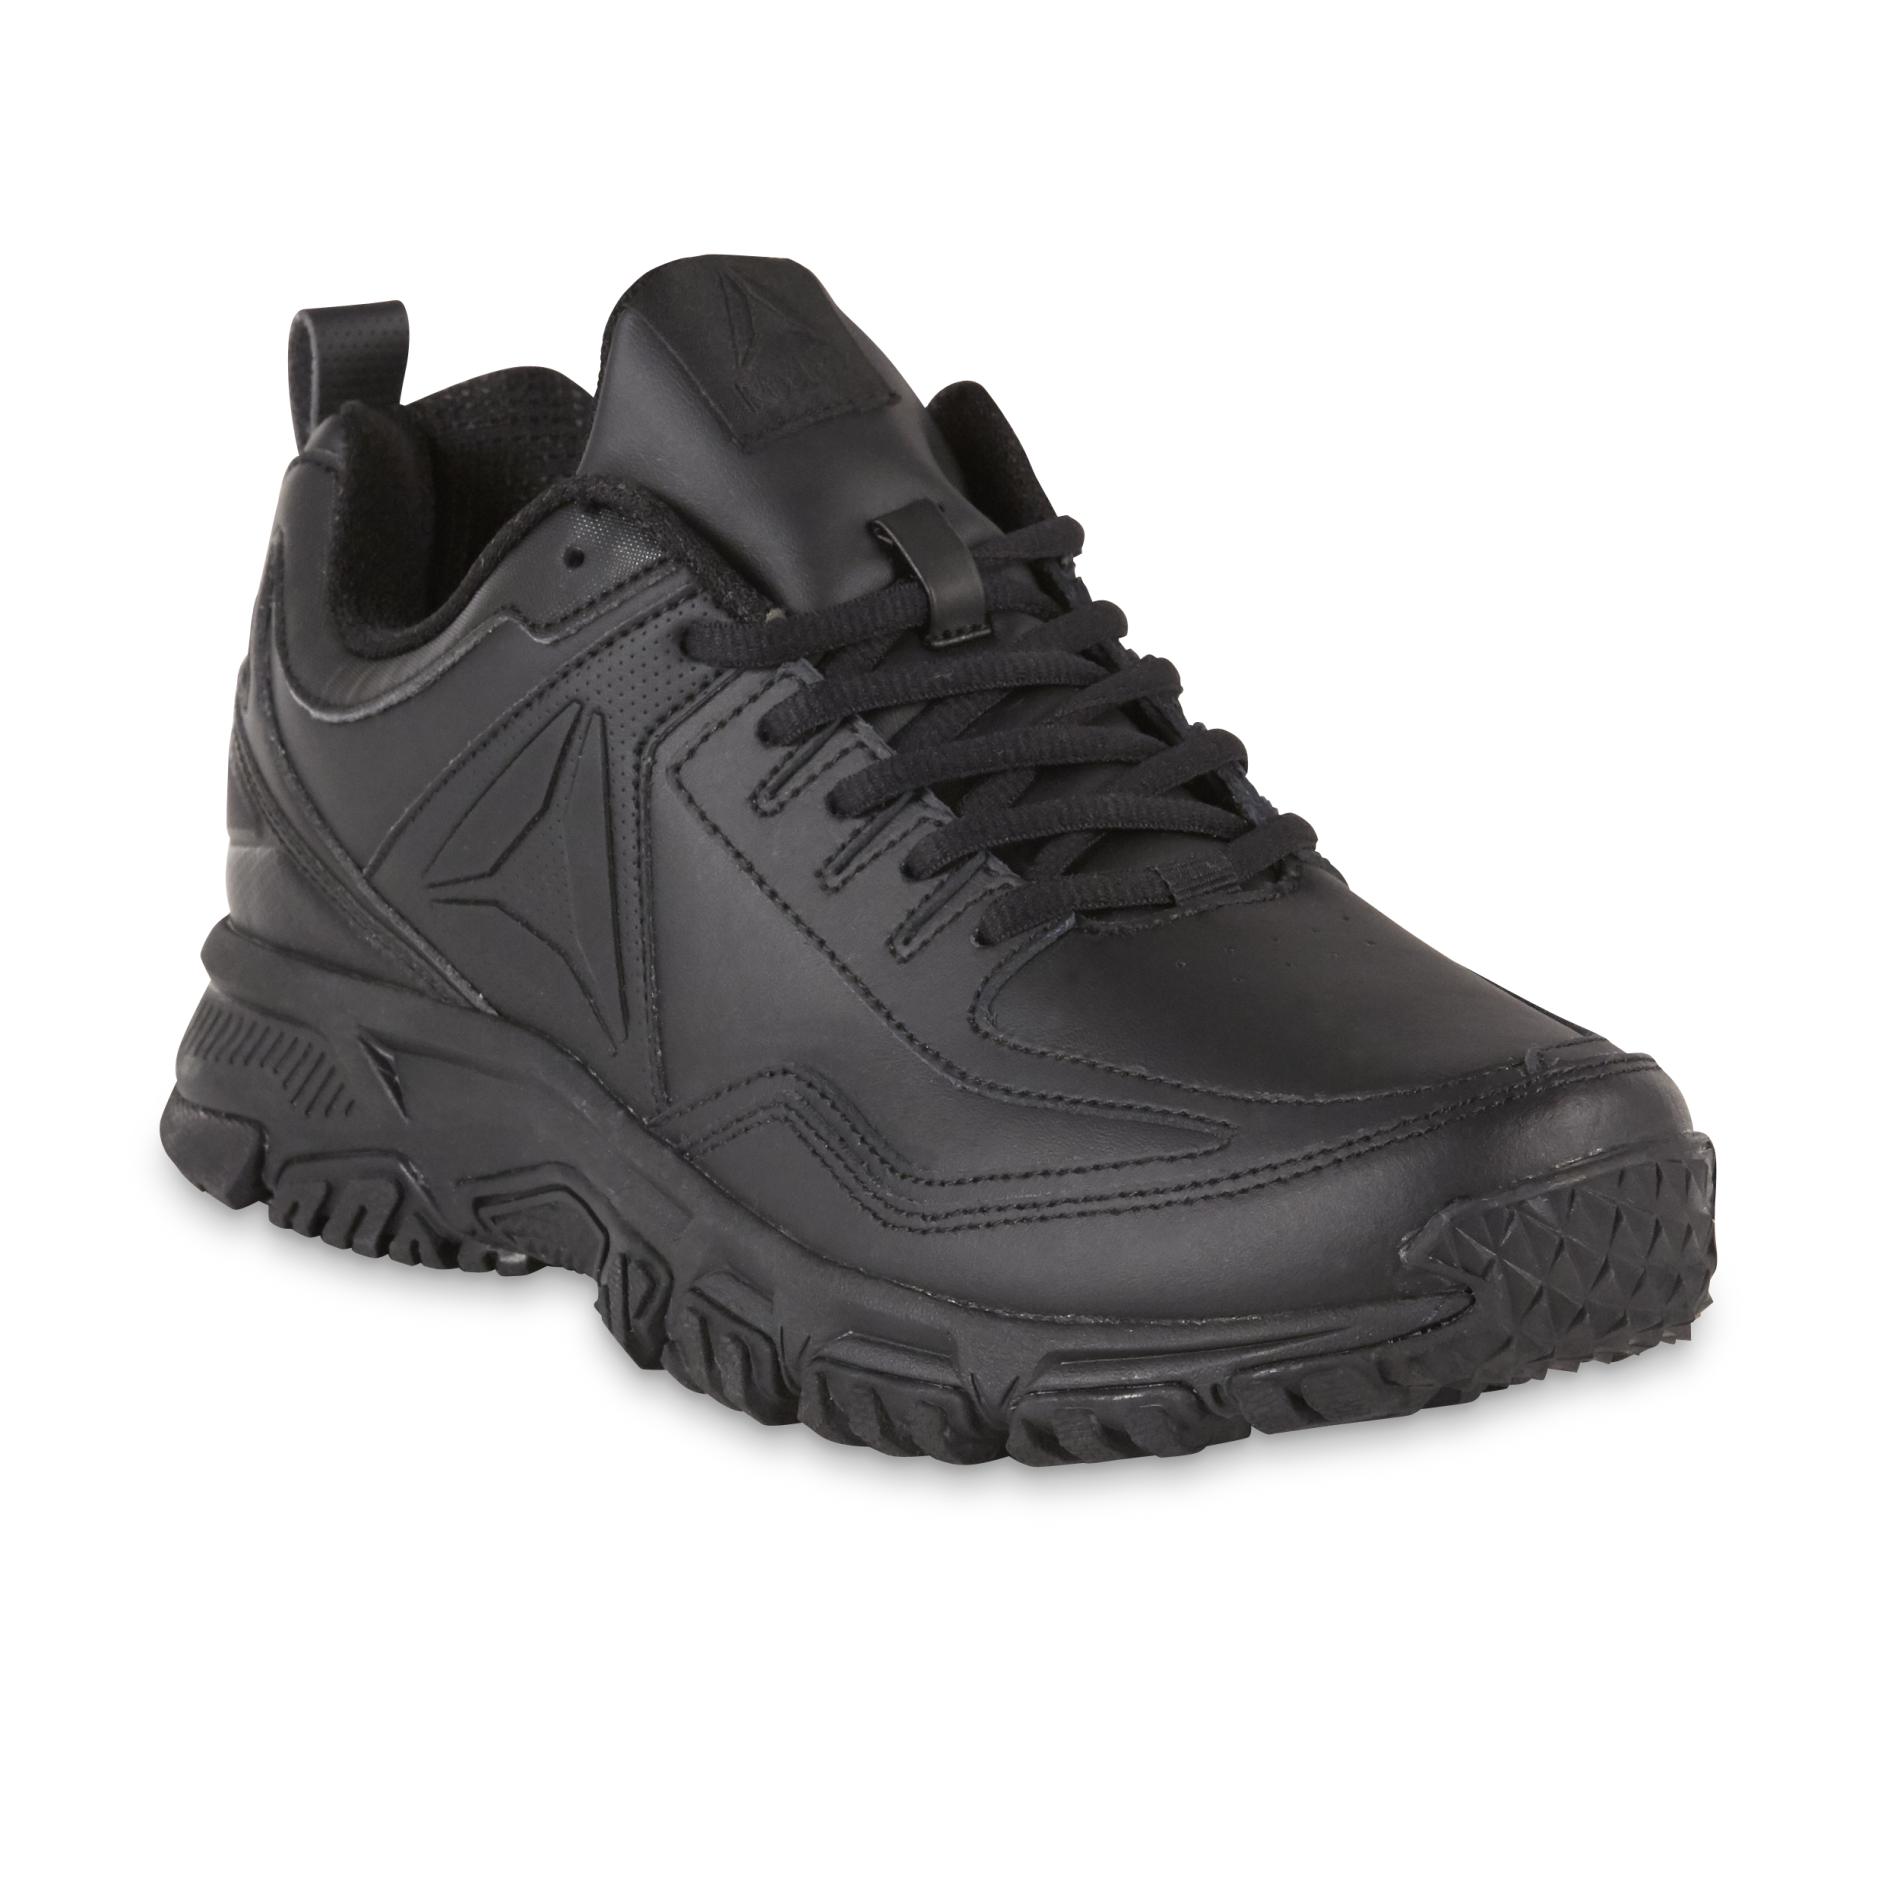 Reebok Men's Ridgerider Leather 4E Sneaker